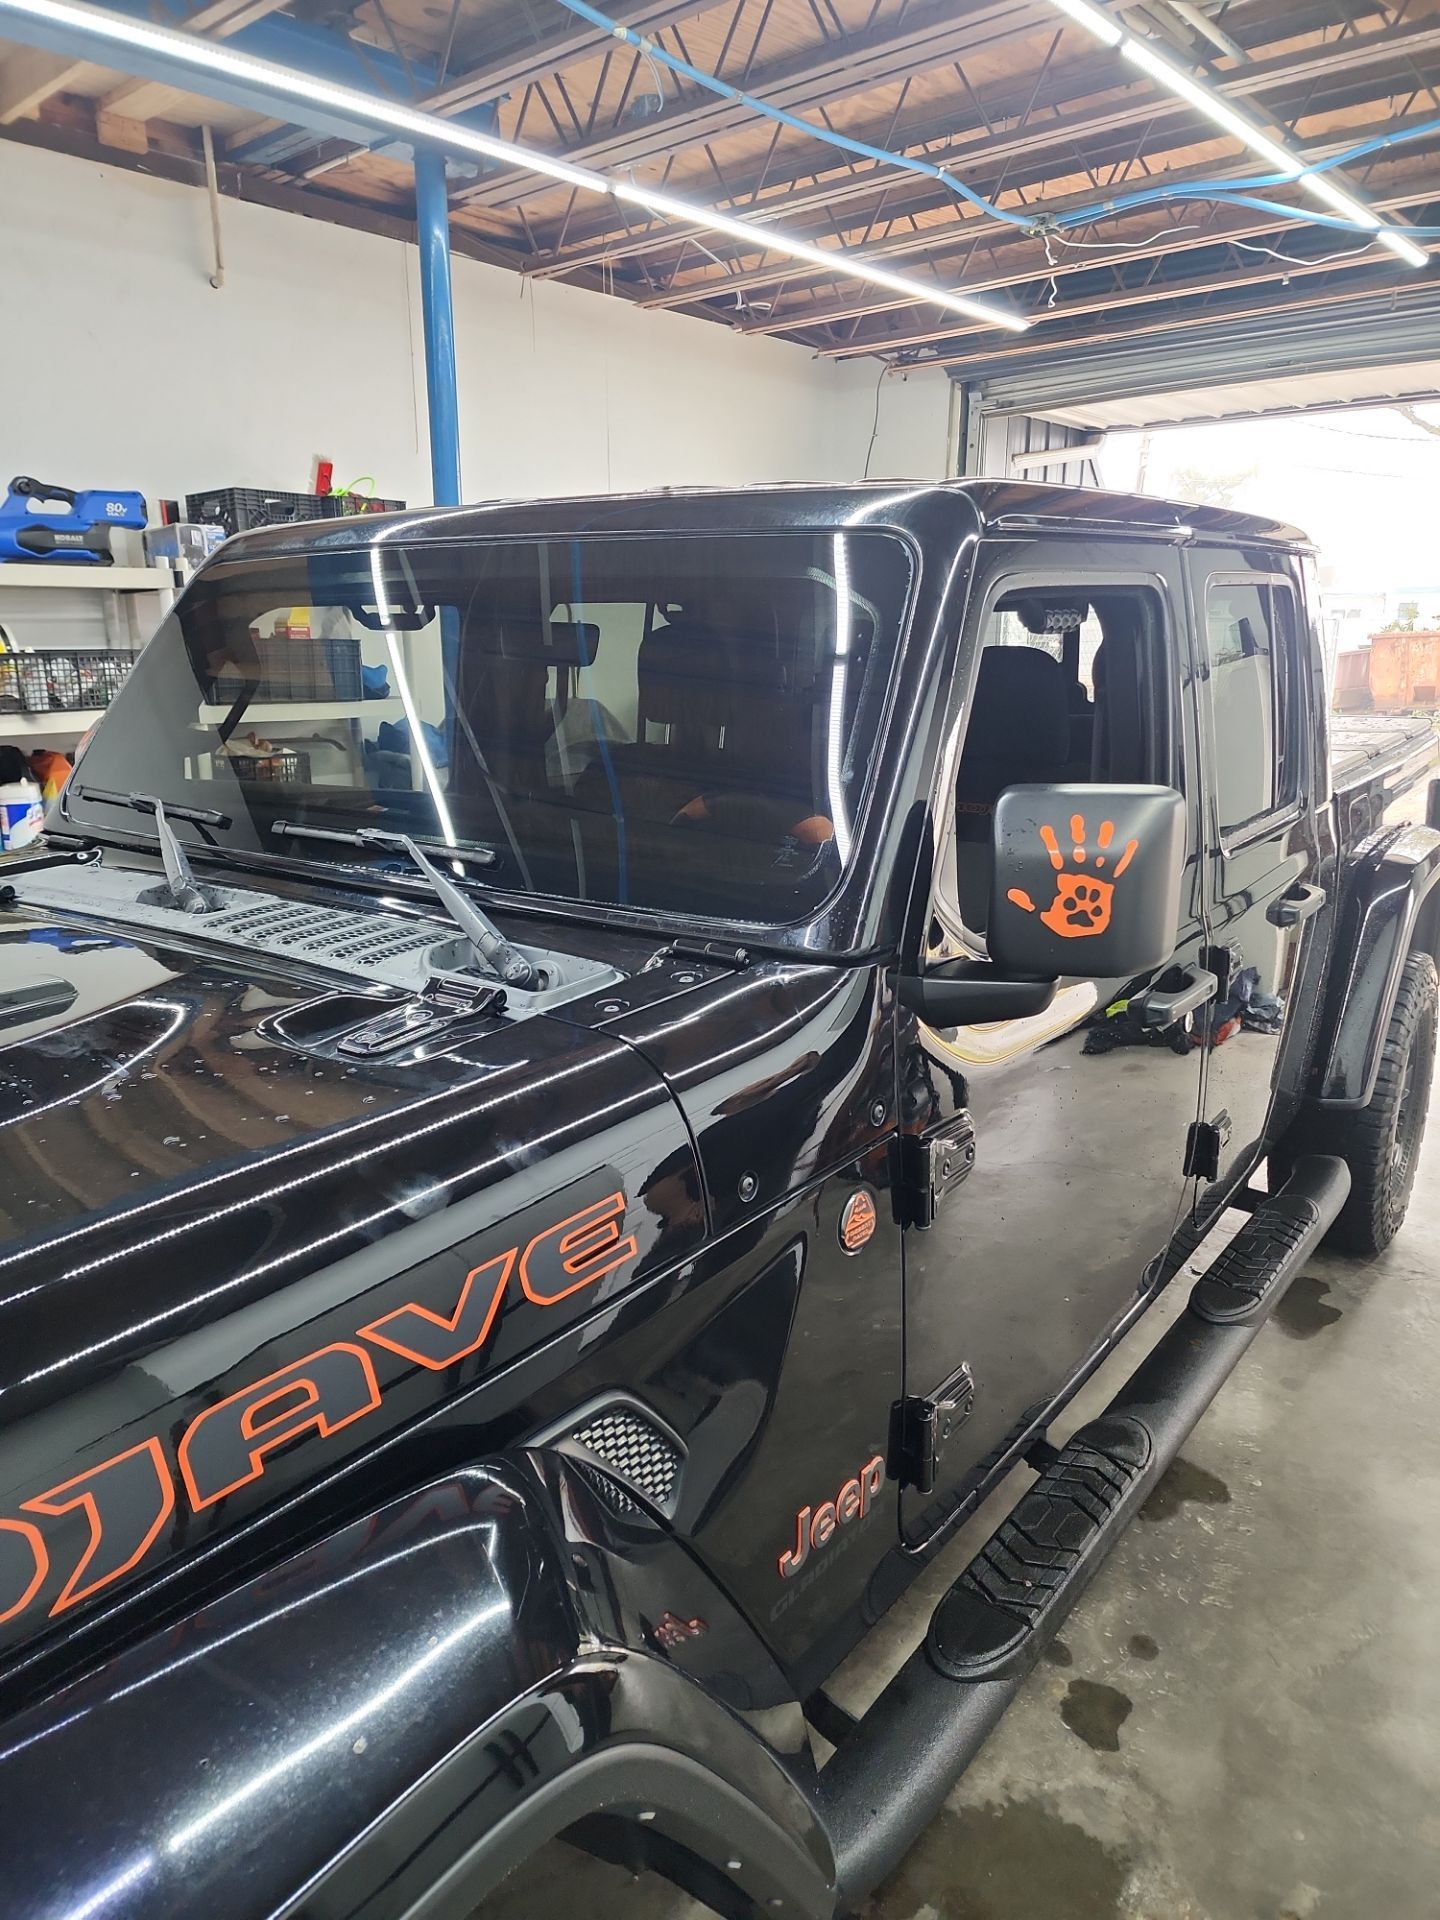 Jeep Wrangler Unlimited Window Tinting in Progress